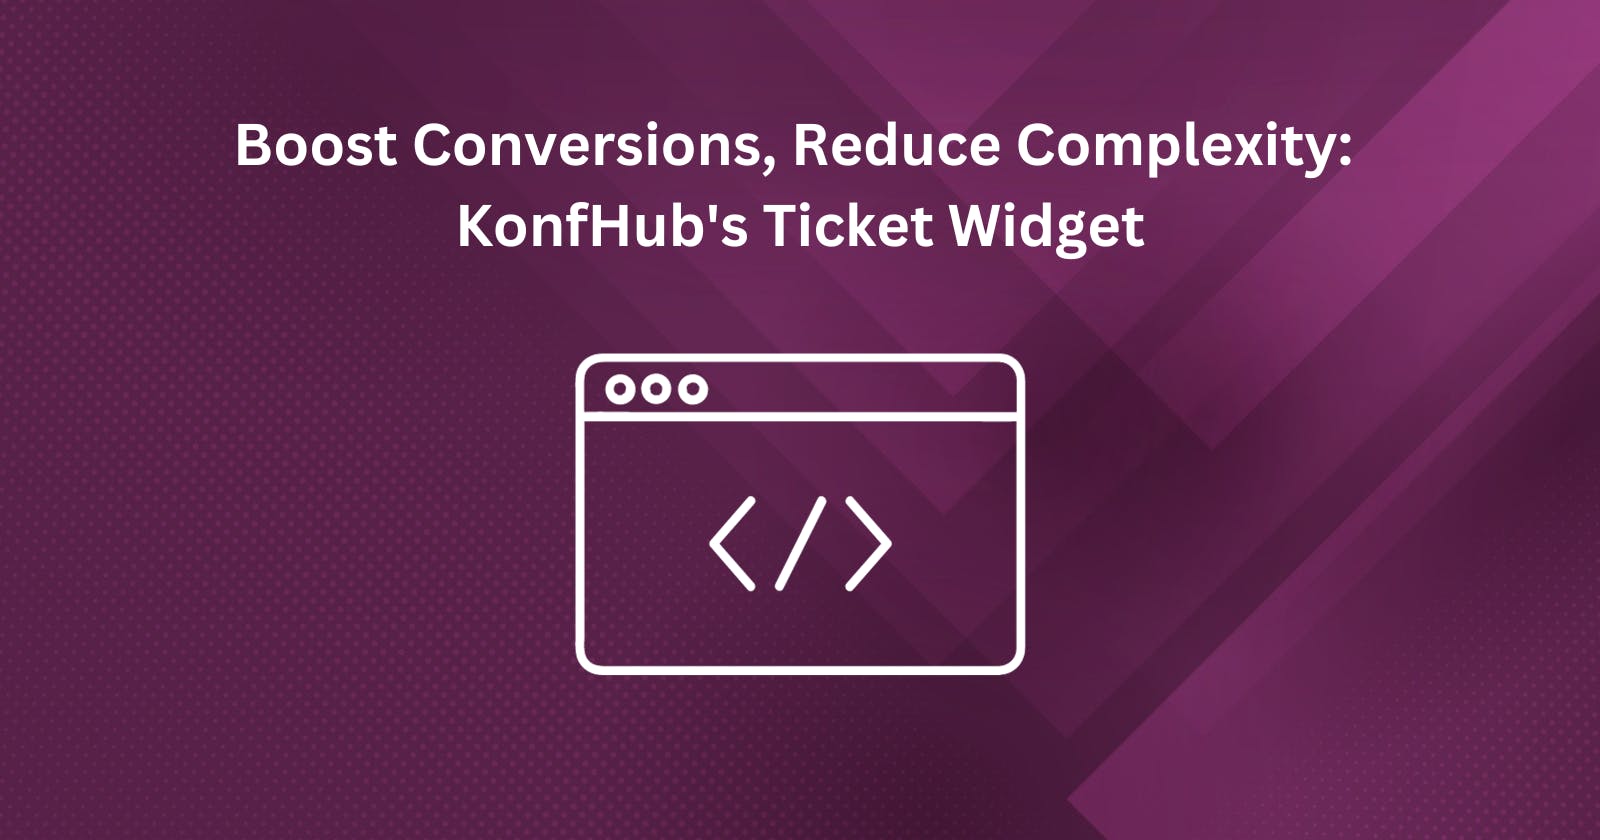 Boost Conversions, Reduce Complexity using KonfHub's Ticket Widget